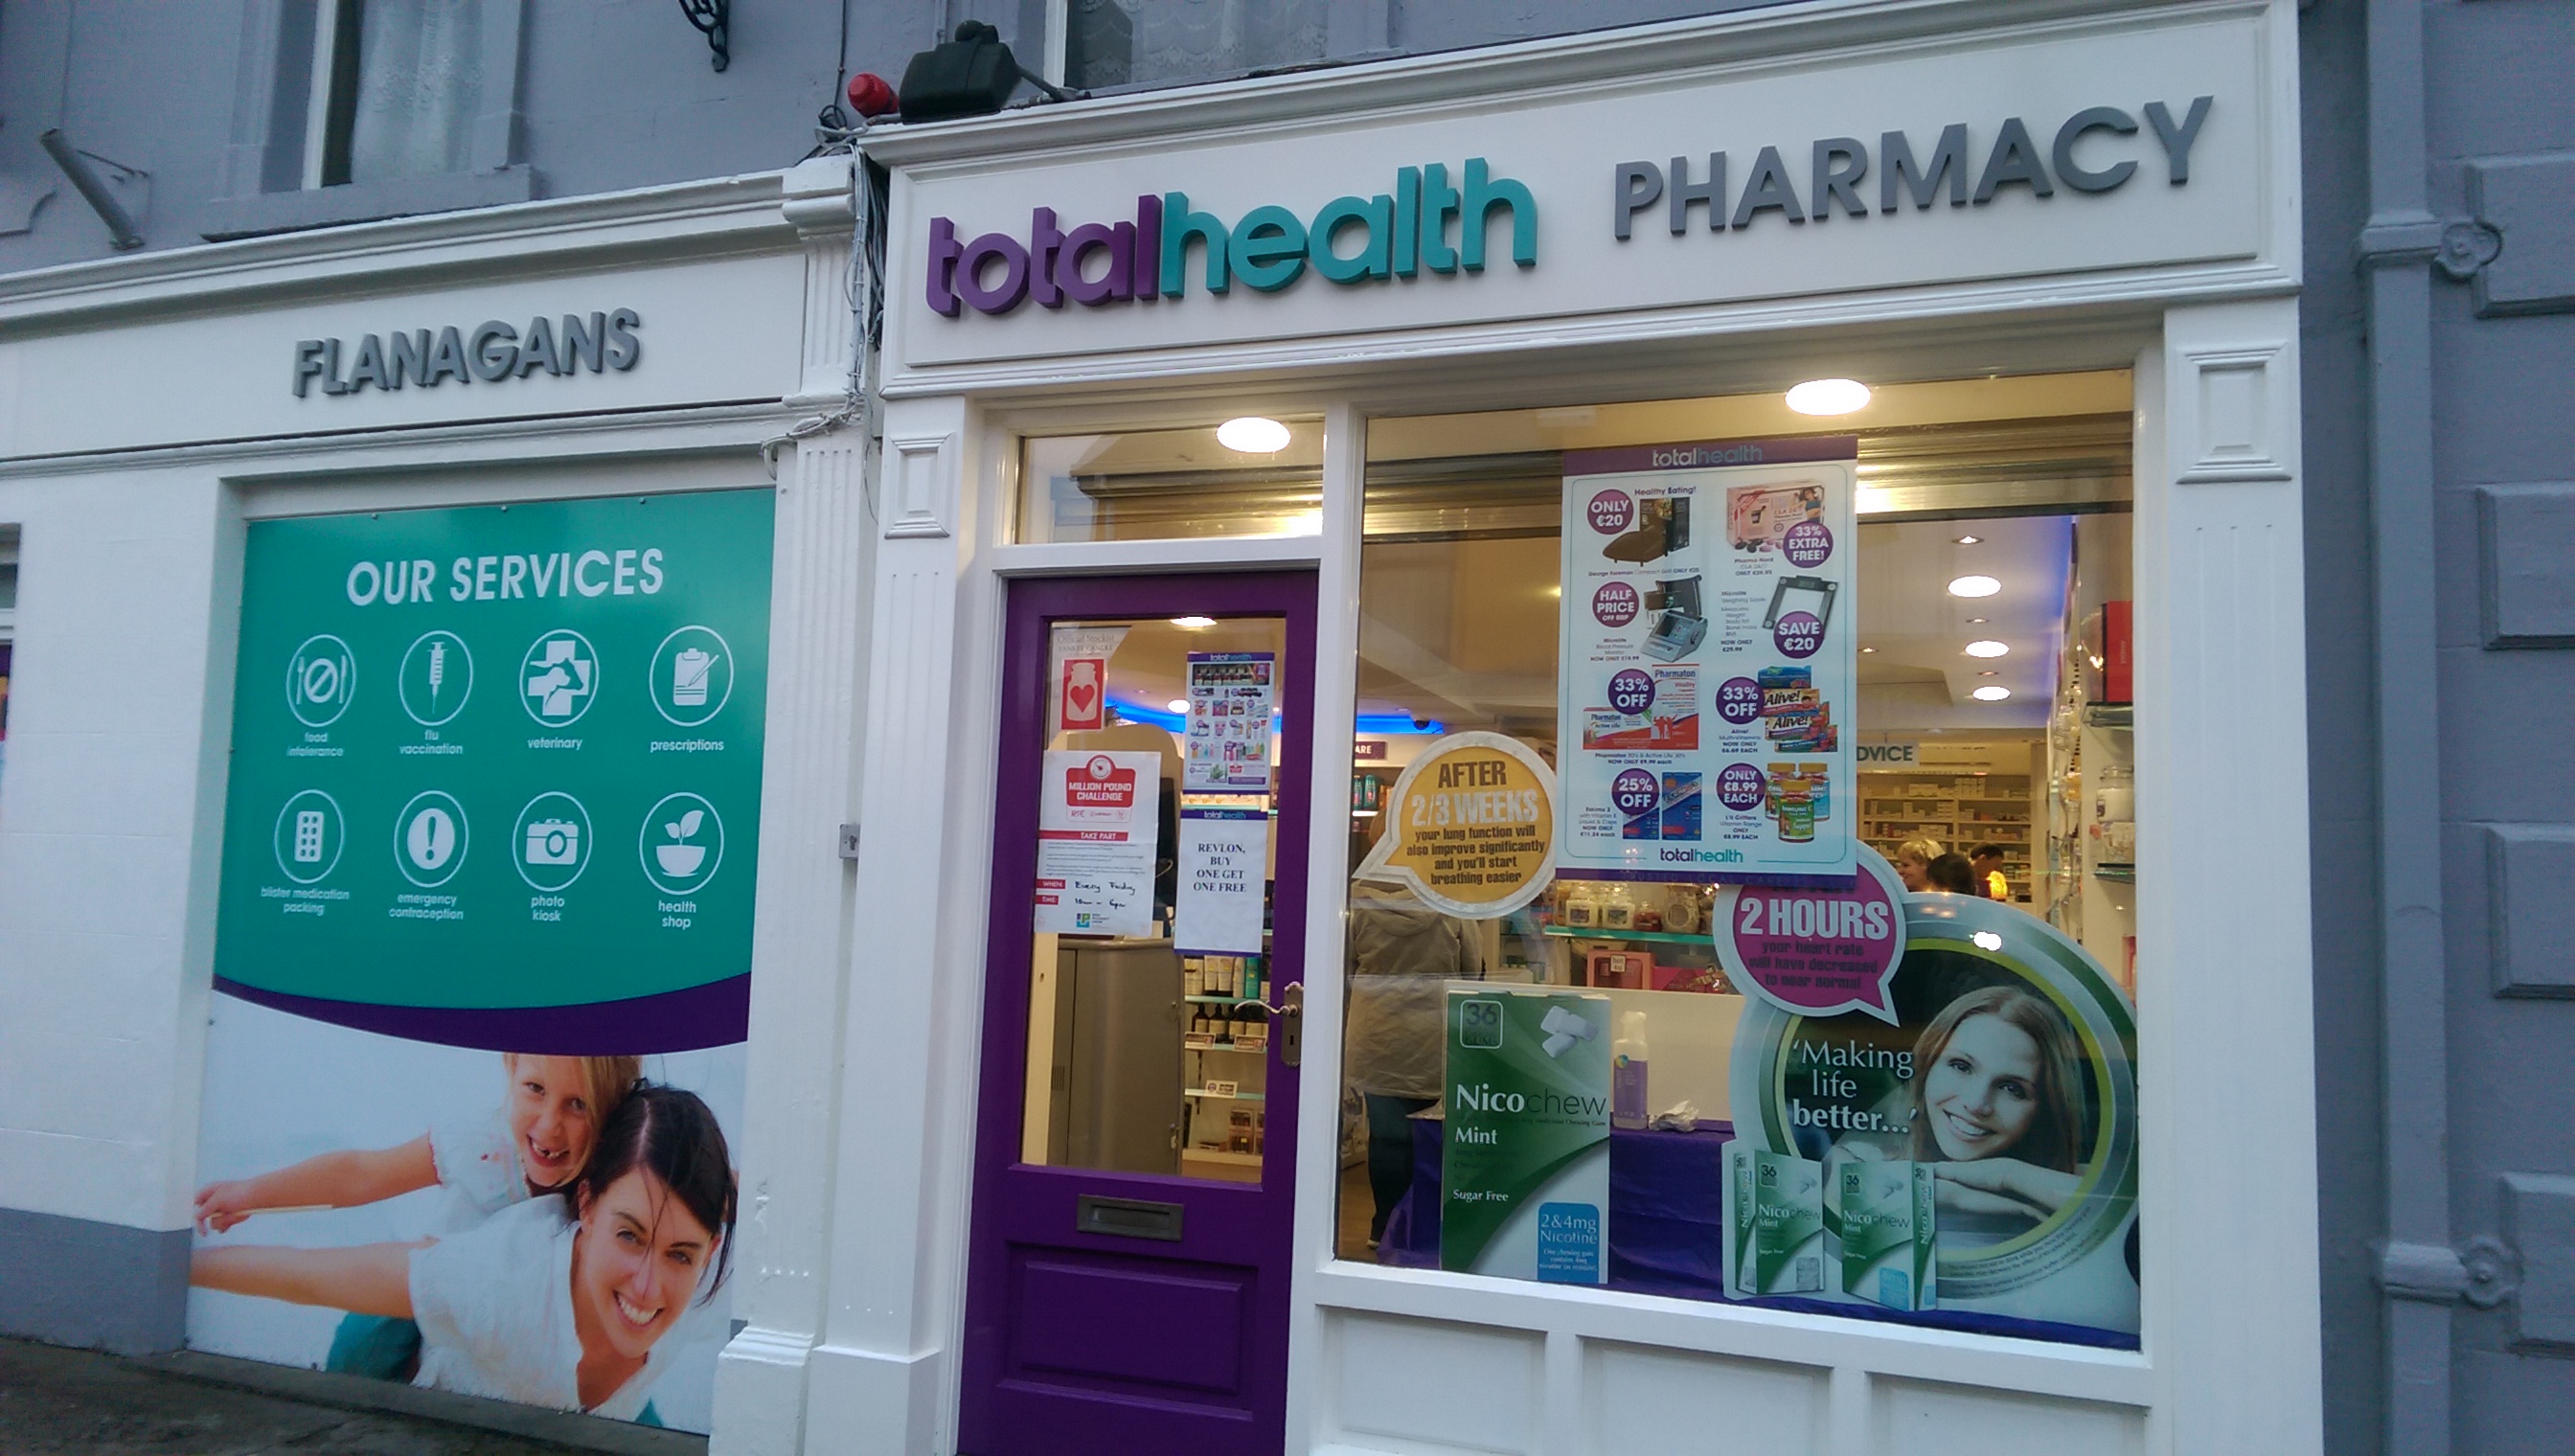 Flanagan's totalhealth Pharmacy - Headford